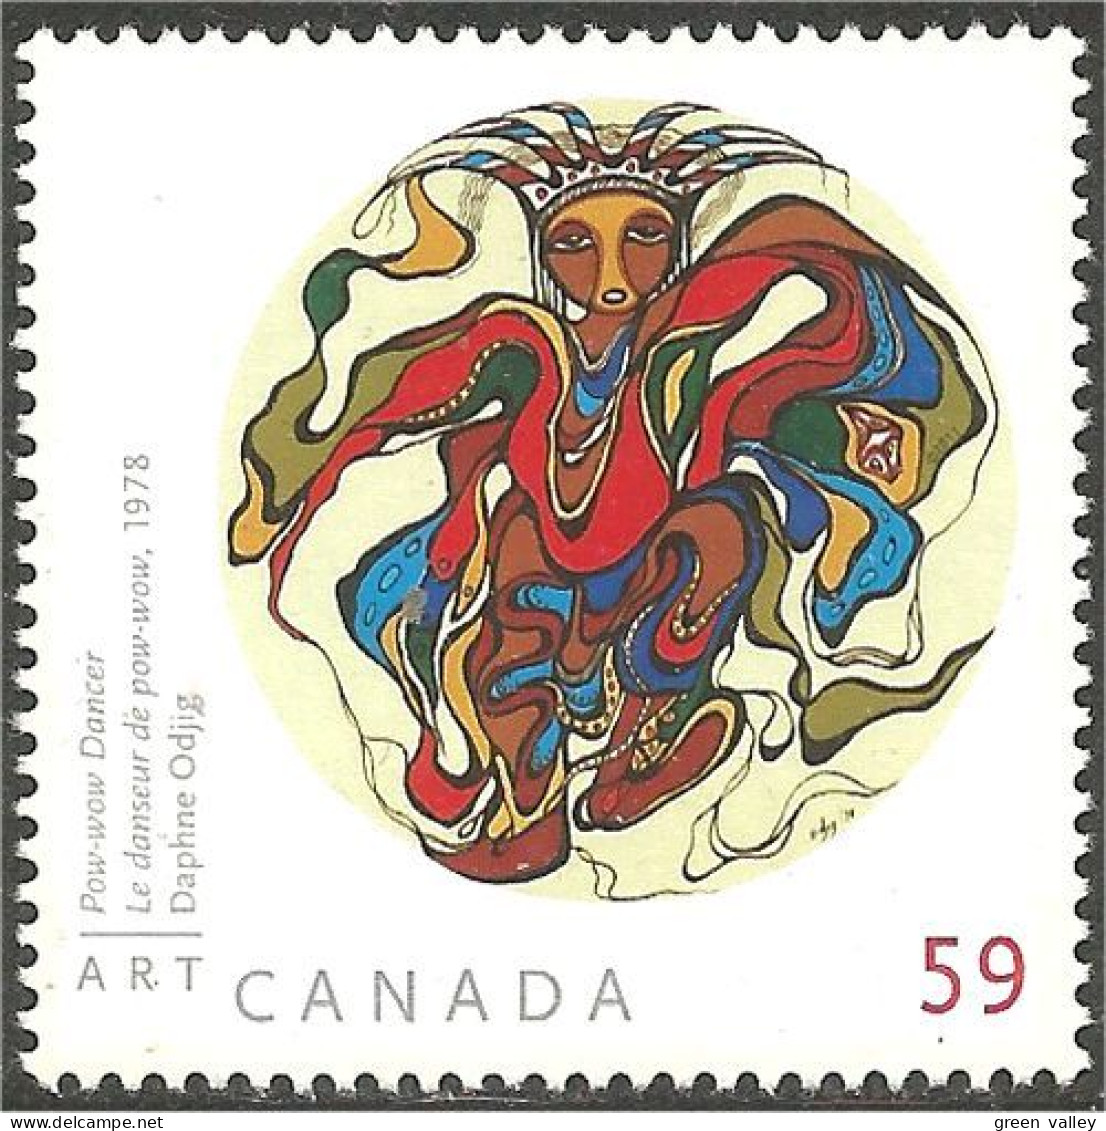 Canada Tableau Odjig Painting Danseur Dance Danse Pow-wow Dancer MNH ** Neuf SC (C24-36c) - Danse